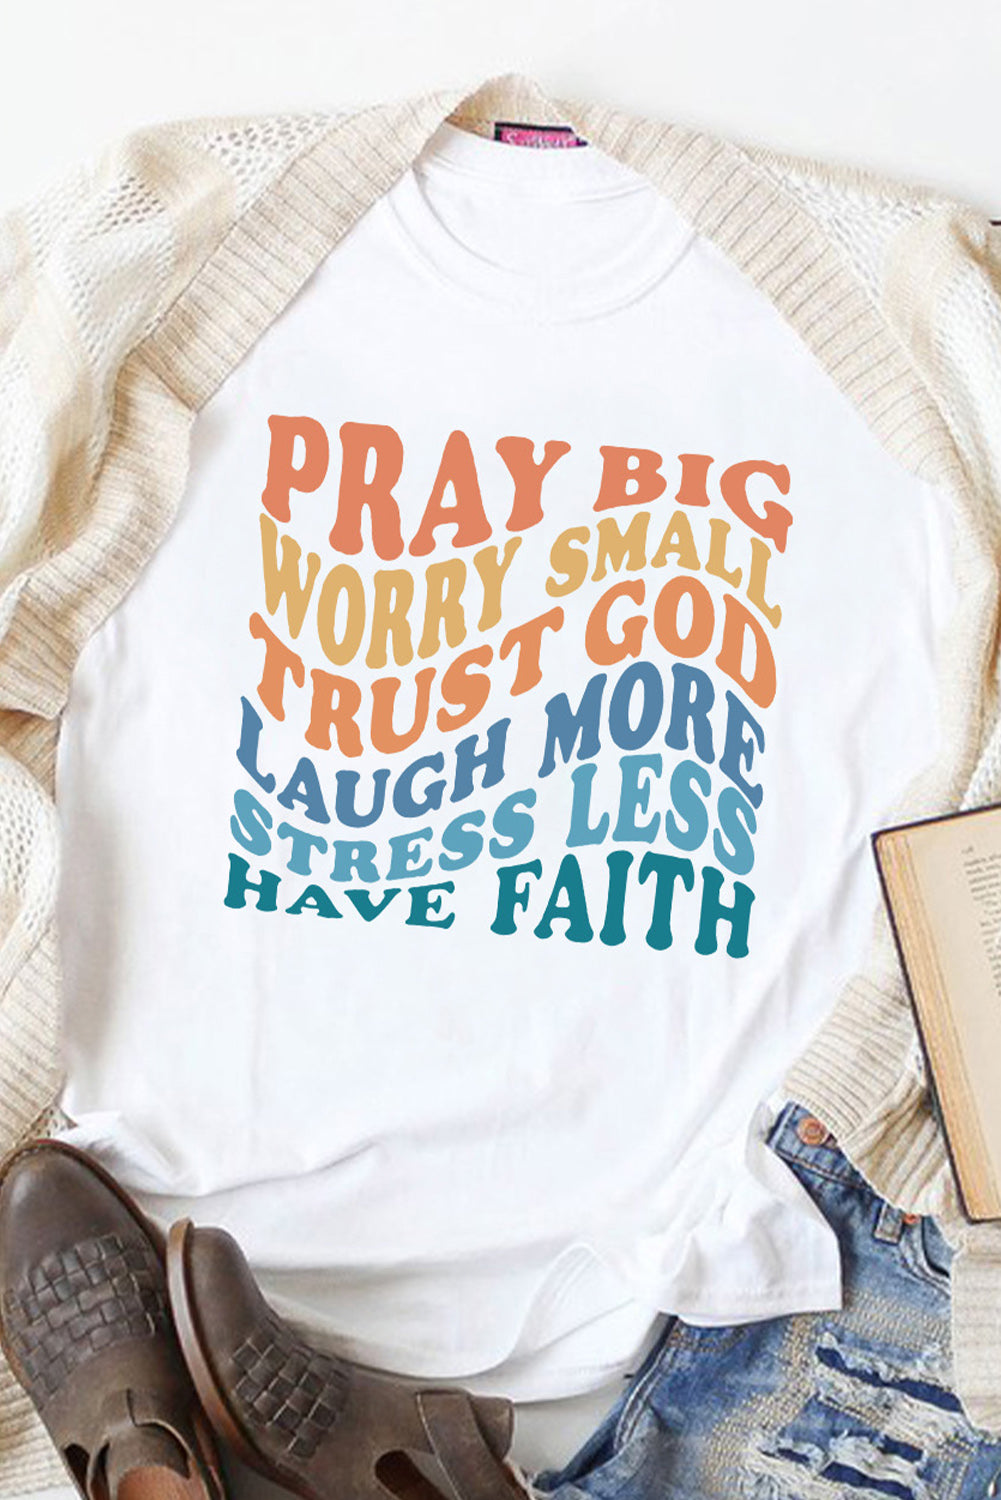 Have Faith Inspired Words Print T Shirt